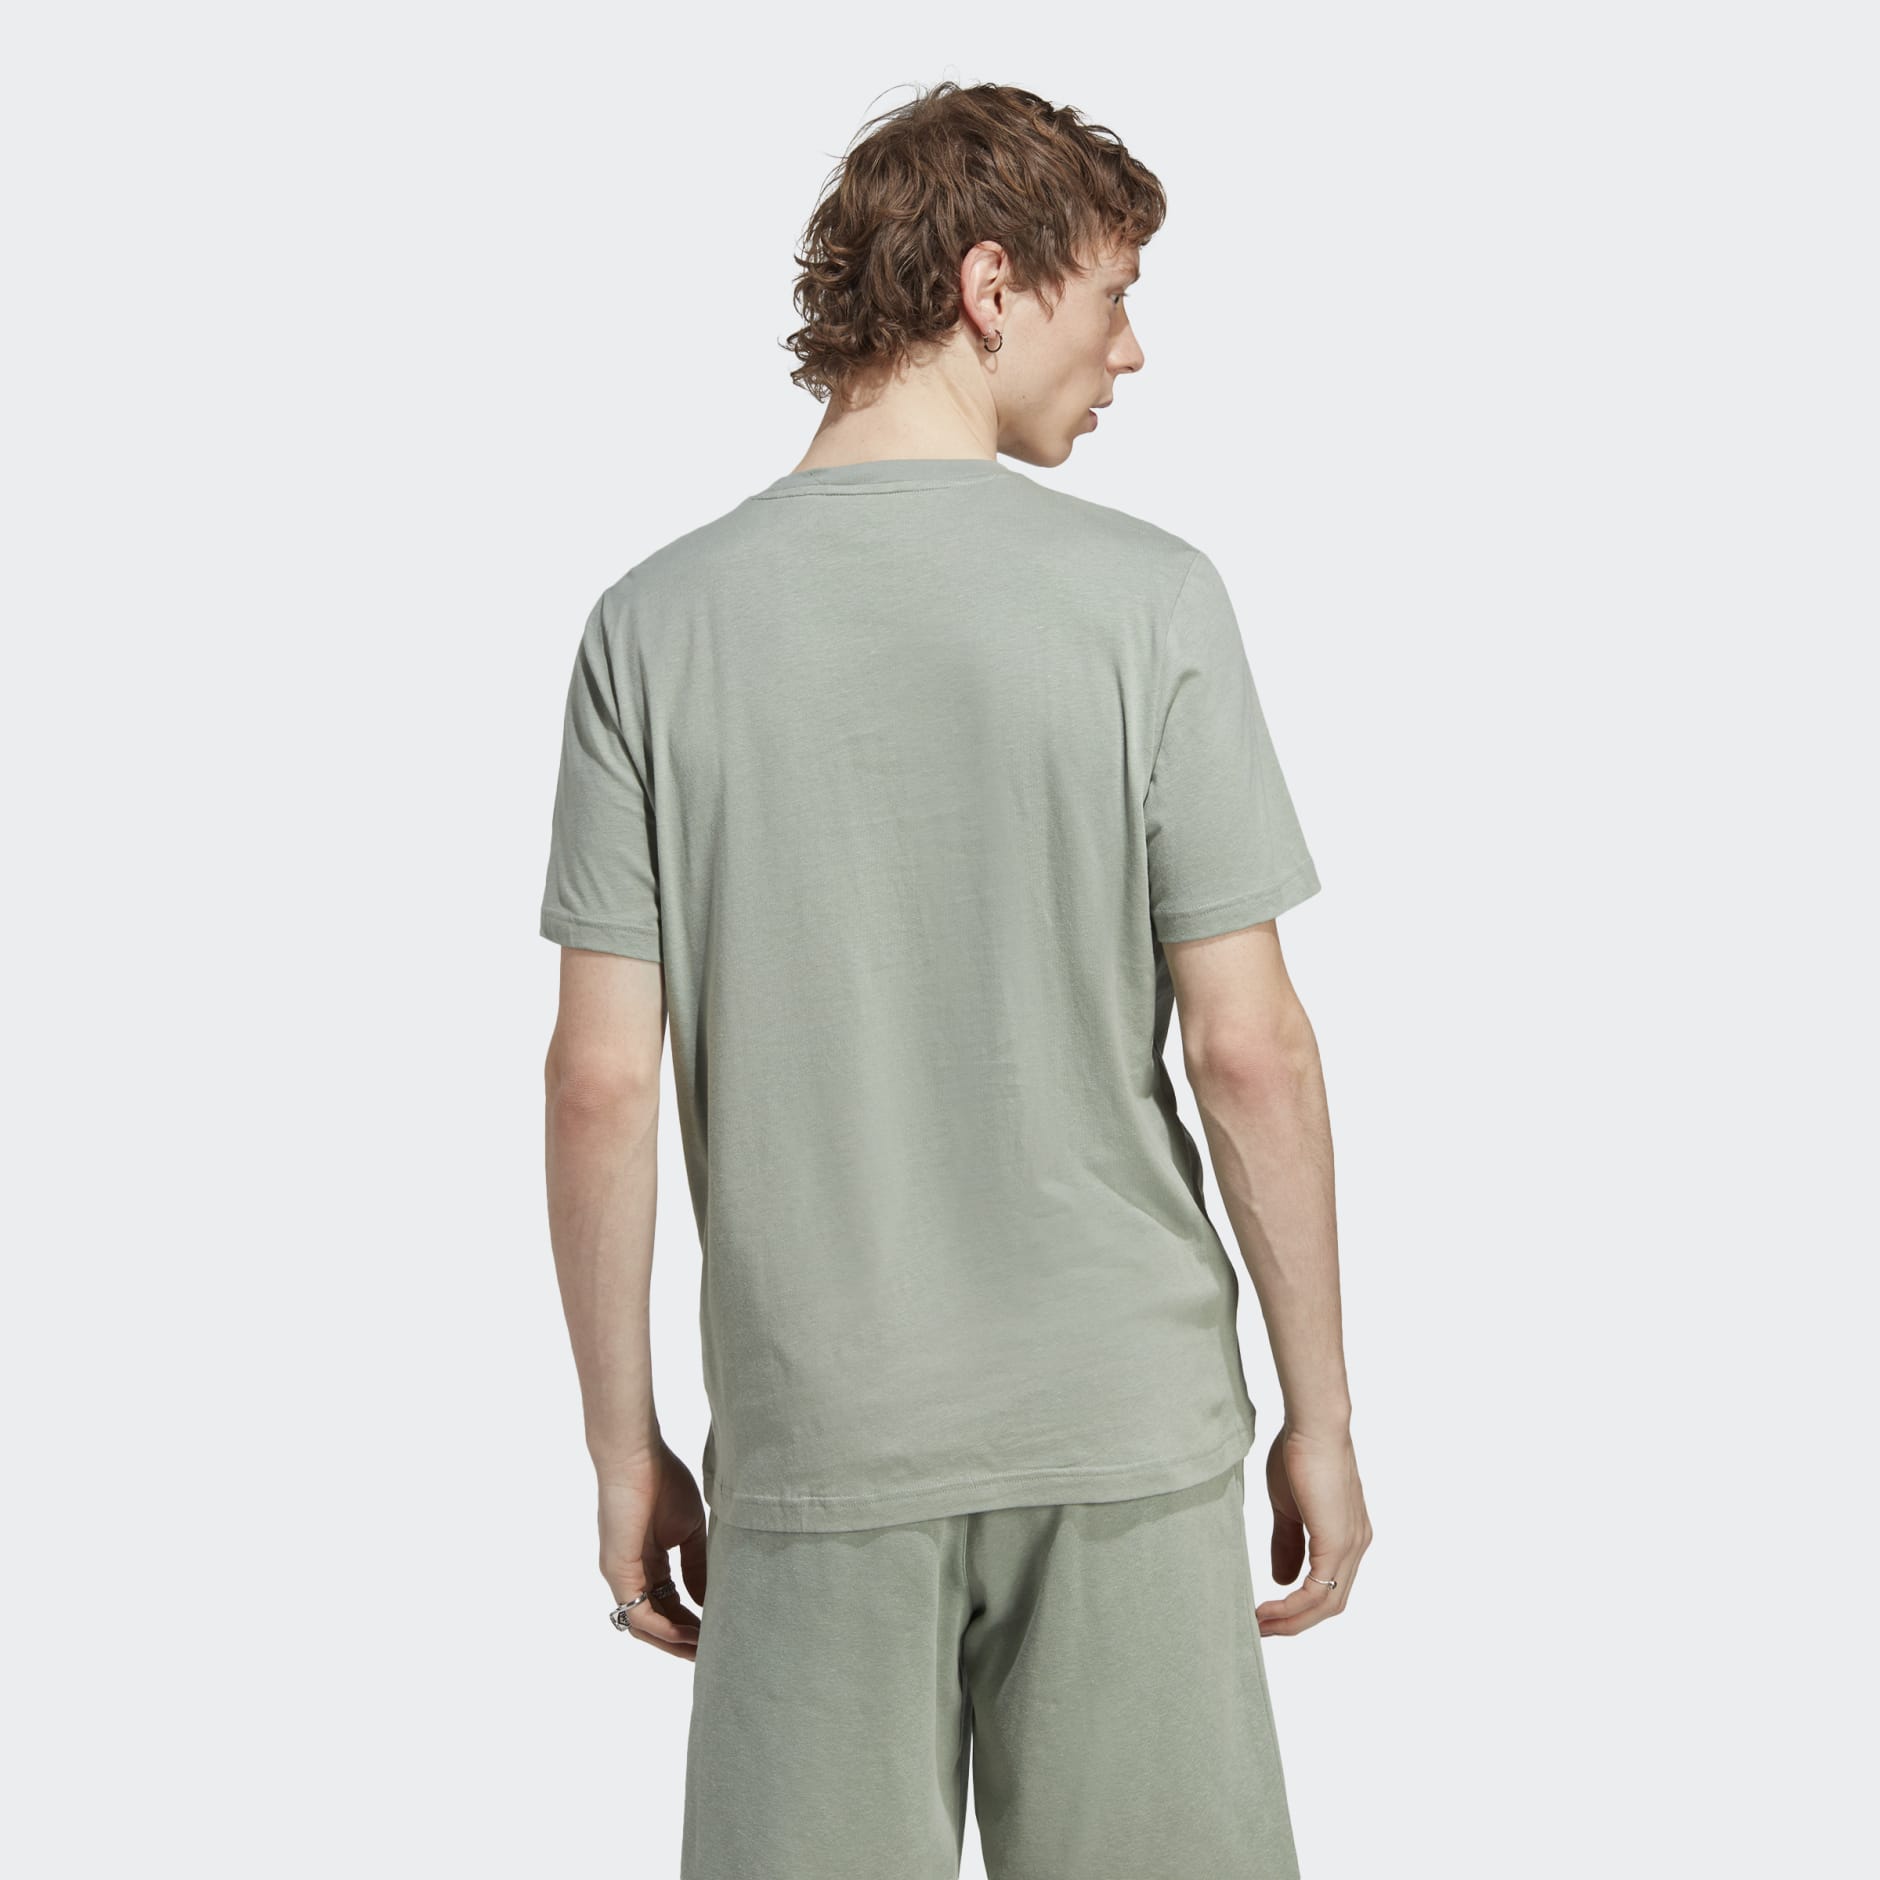 Essentials+ | Clothing Made Hemp - Israel With adidas Green Tee -